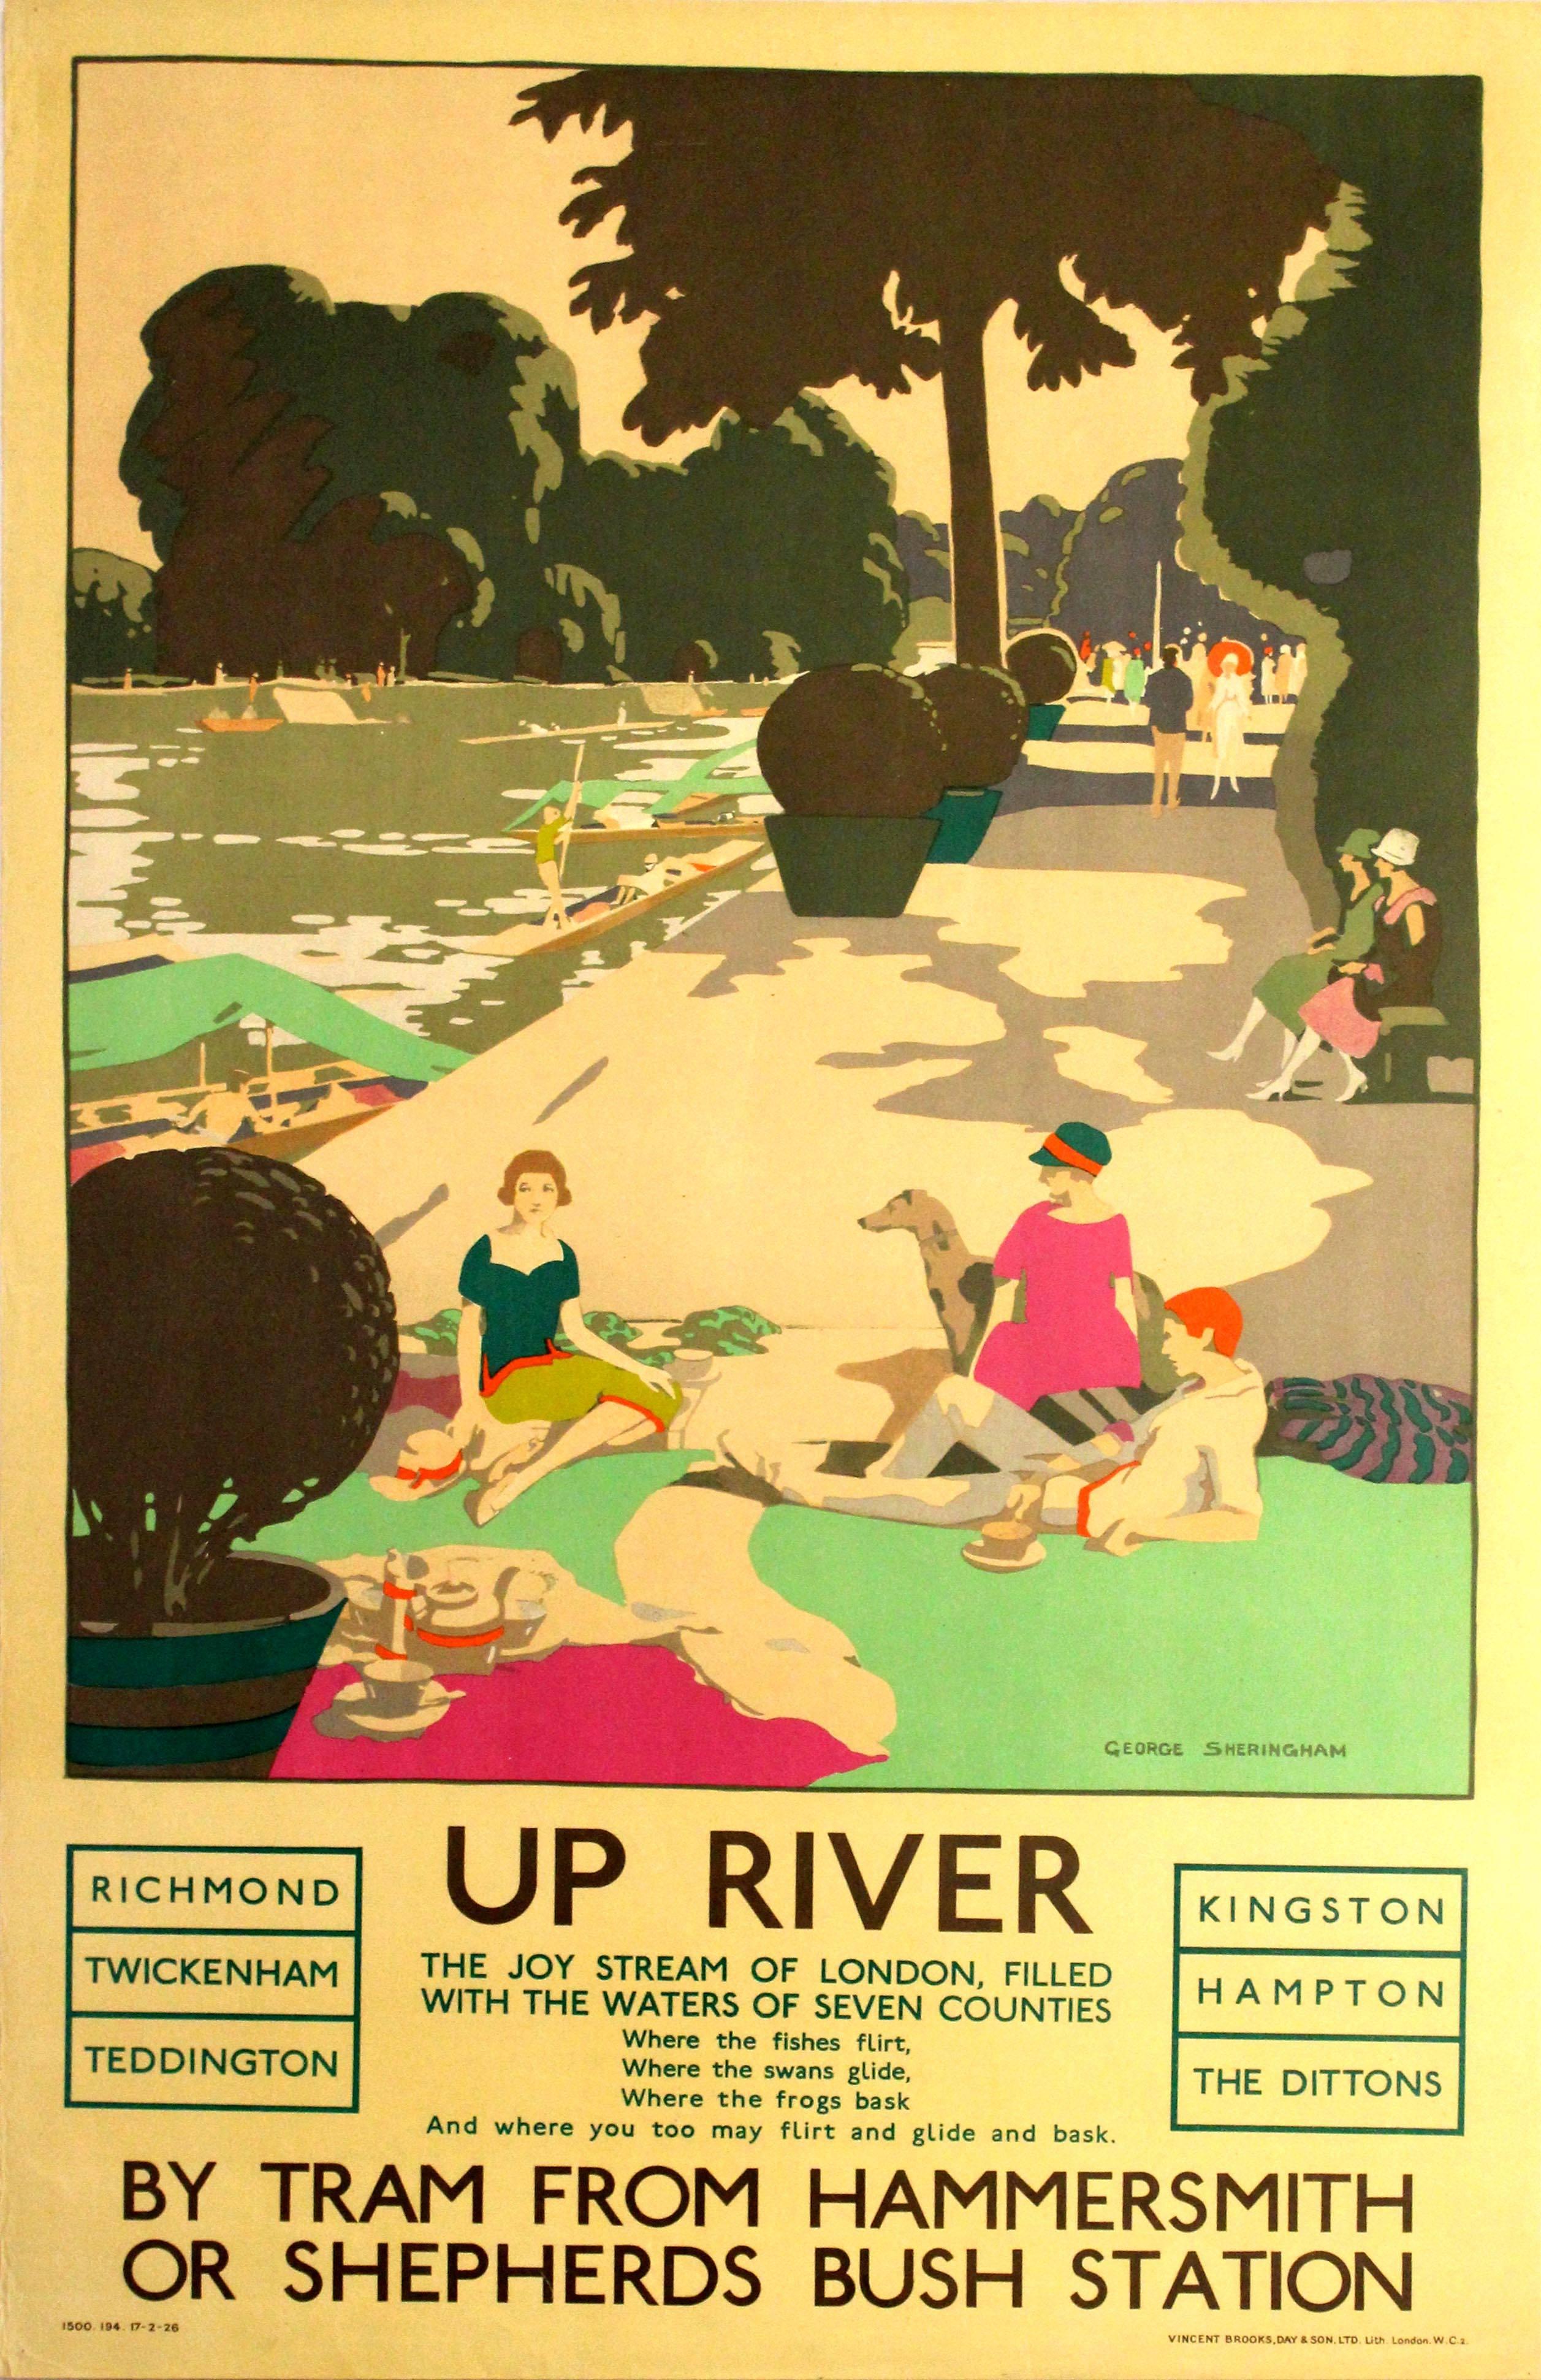 George Sheringham Print - Original Vintage 1926 London Transport Poster: Up River The Joy Stream Of London